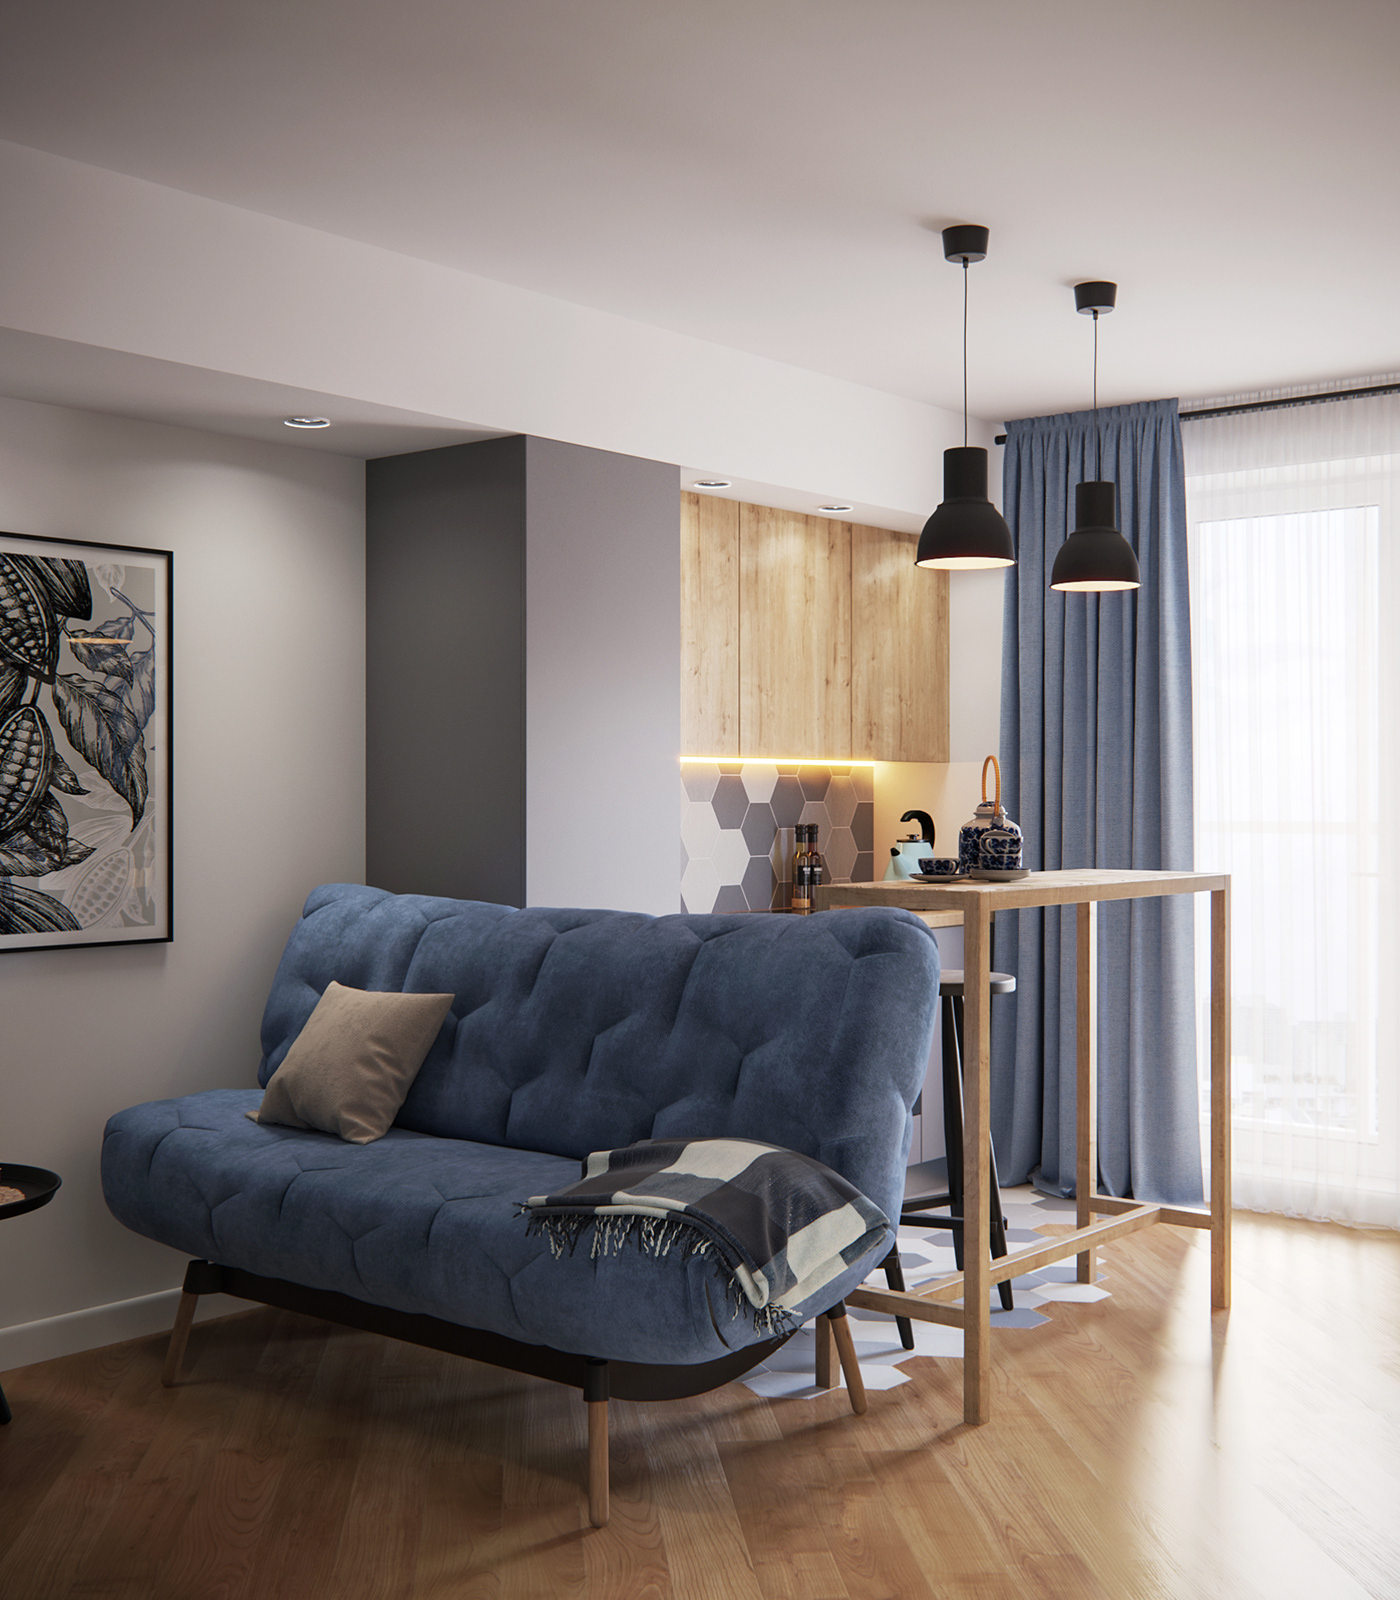 V-ray wood 3drender 3dsmax 3dvisualisation interiordesign cozy Studio apartment